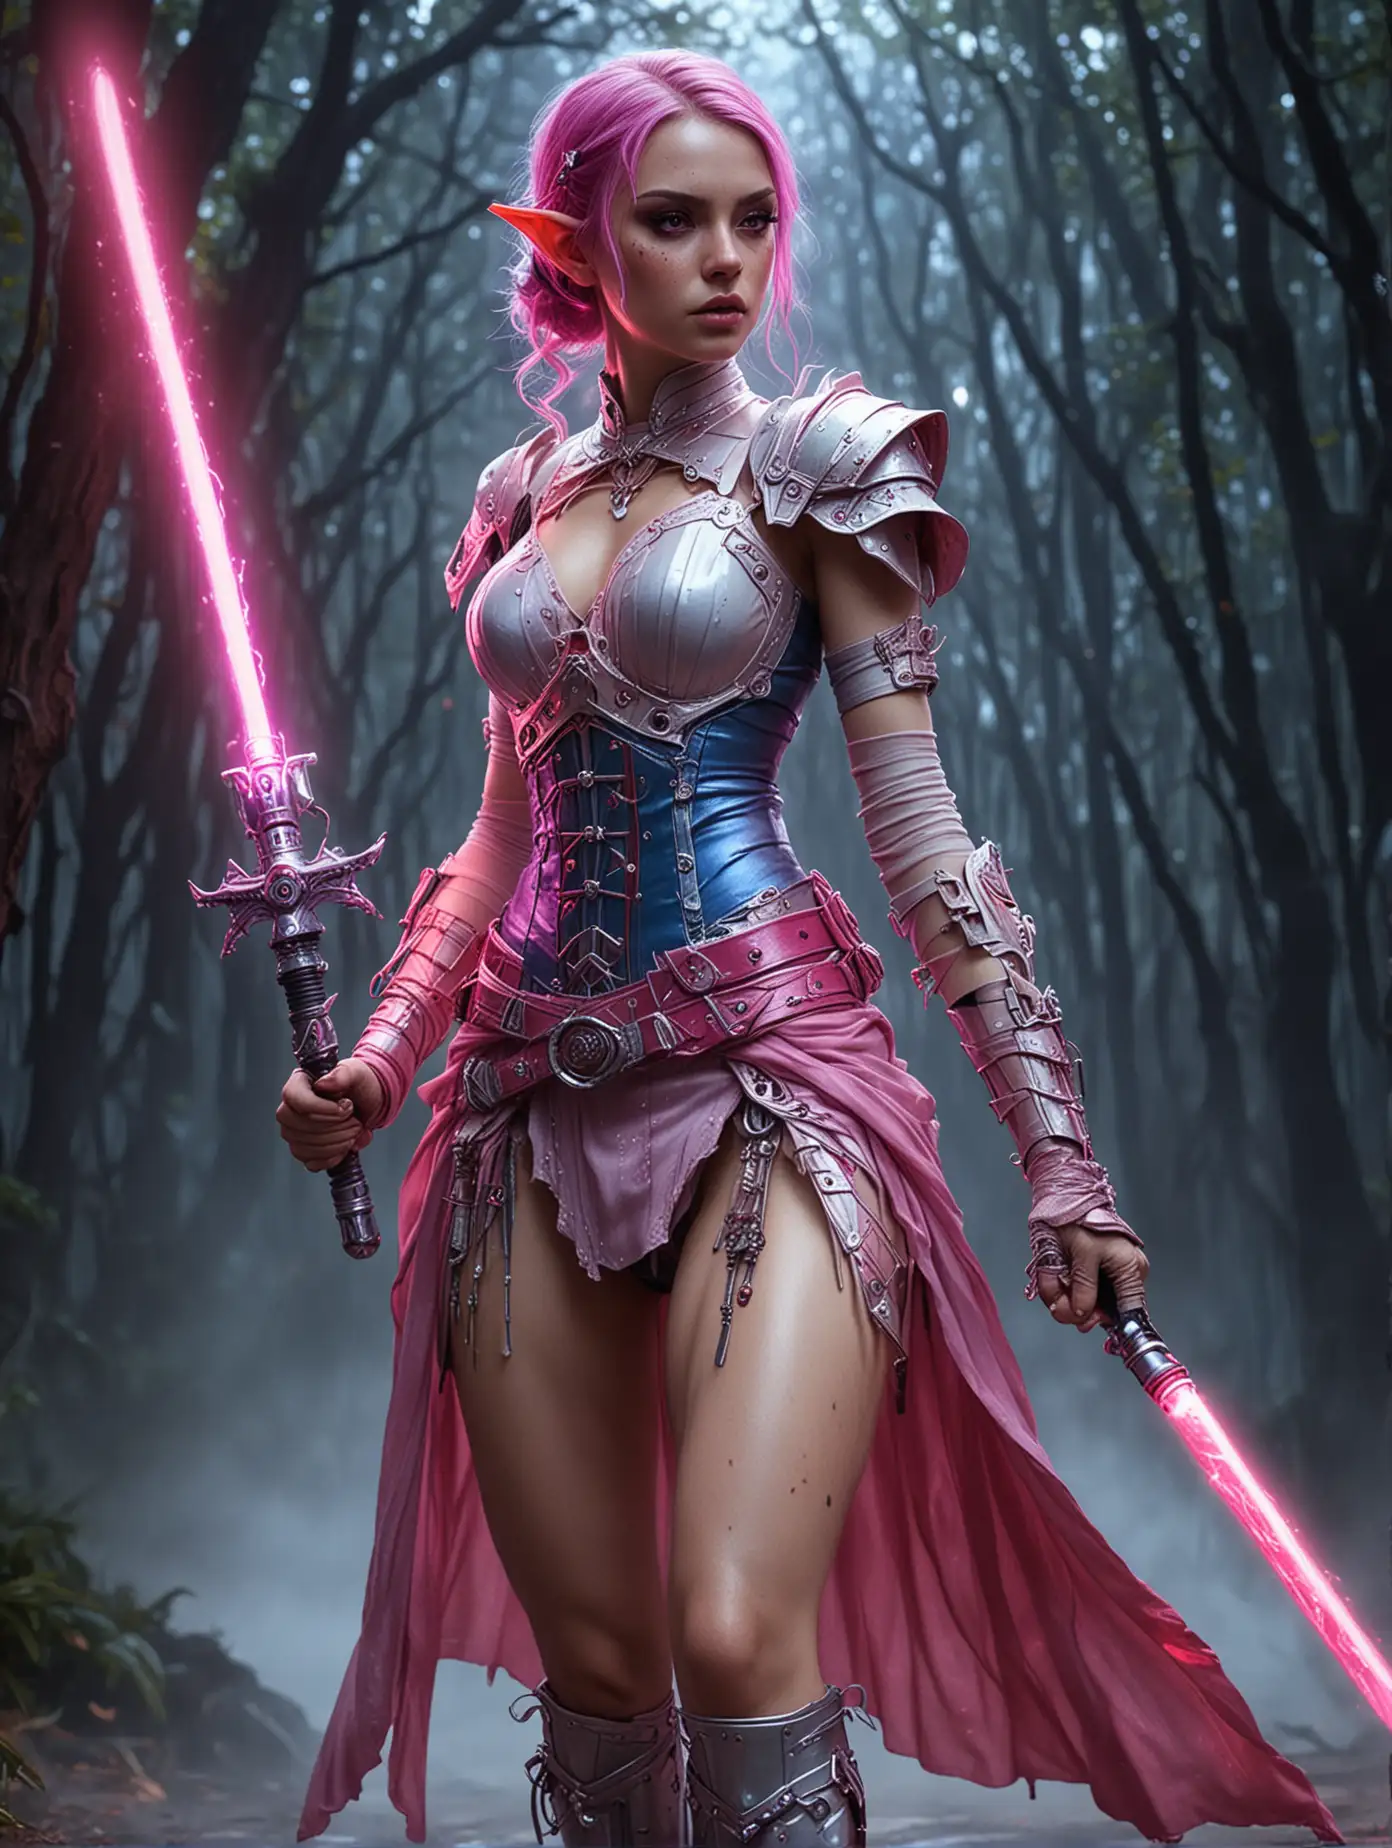 Cyberpunk Warrior Elf with Hot Pink Lightsaber in Moonlit Battle